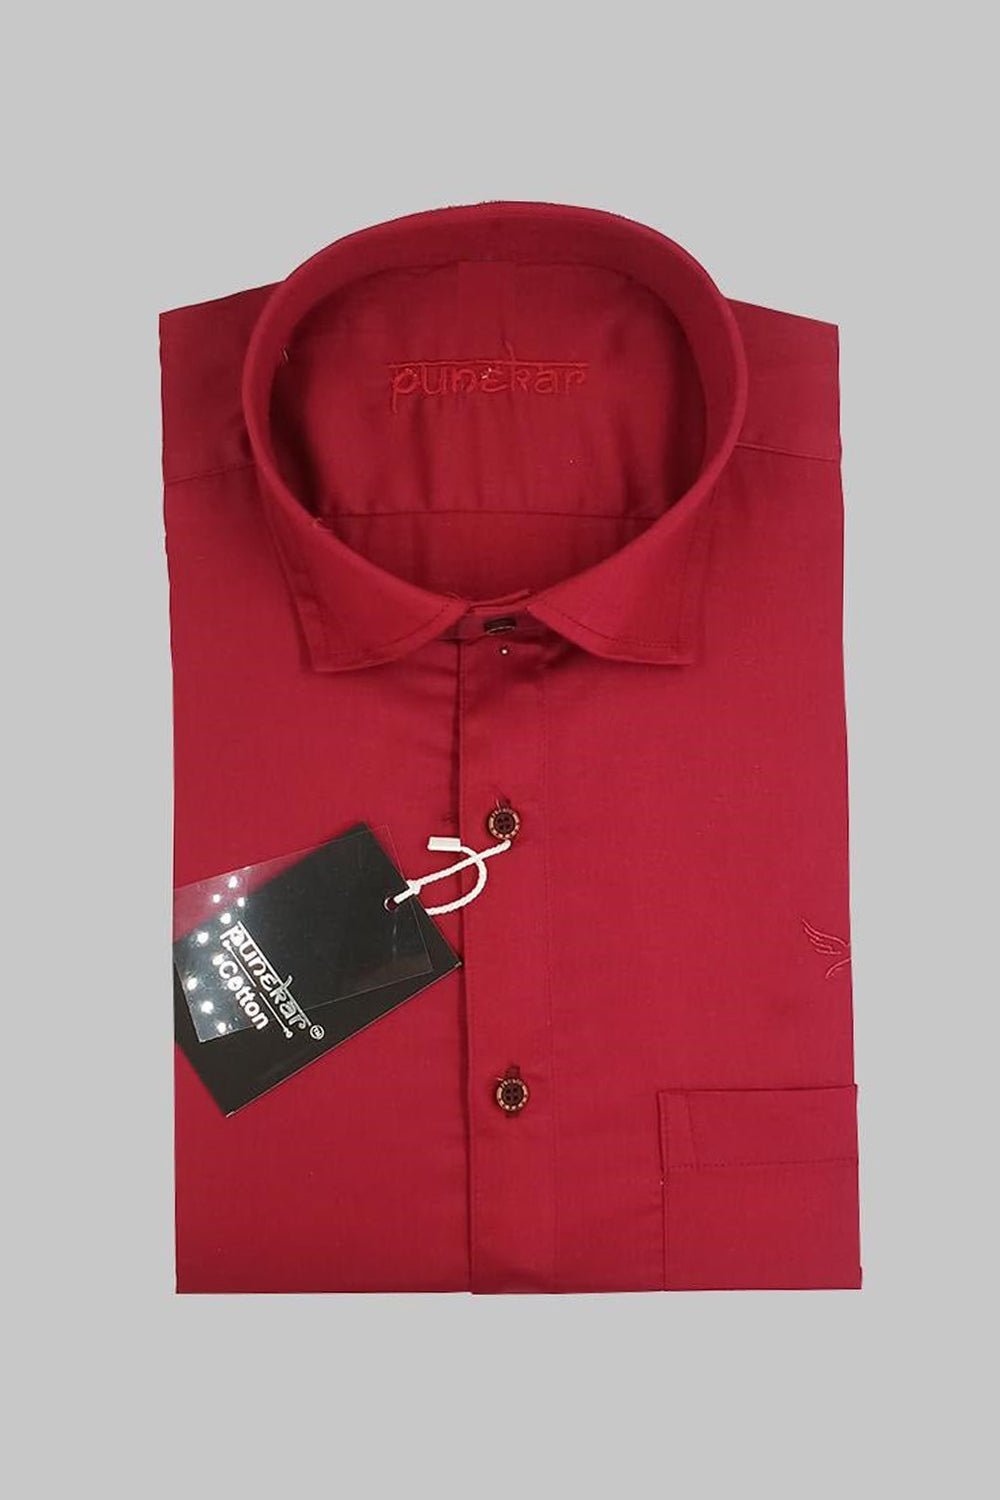 Punekar Cotton Satin Red Color Full Sleeves Formal Shirt for Men&